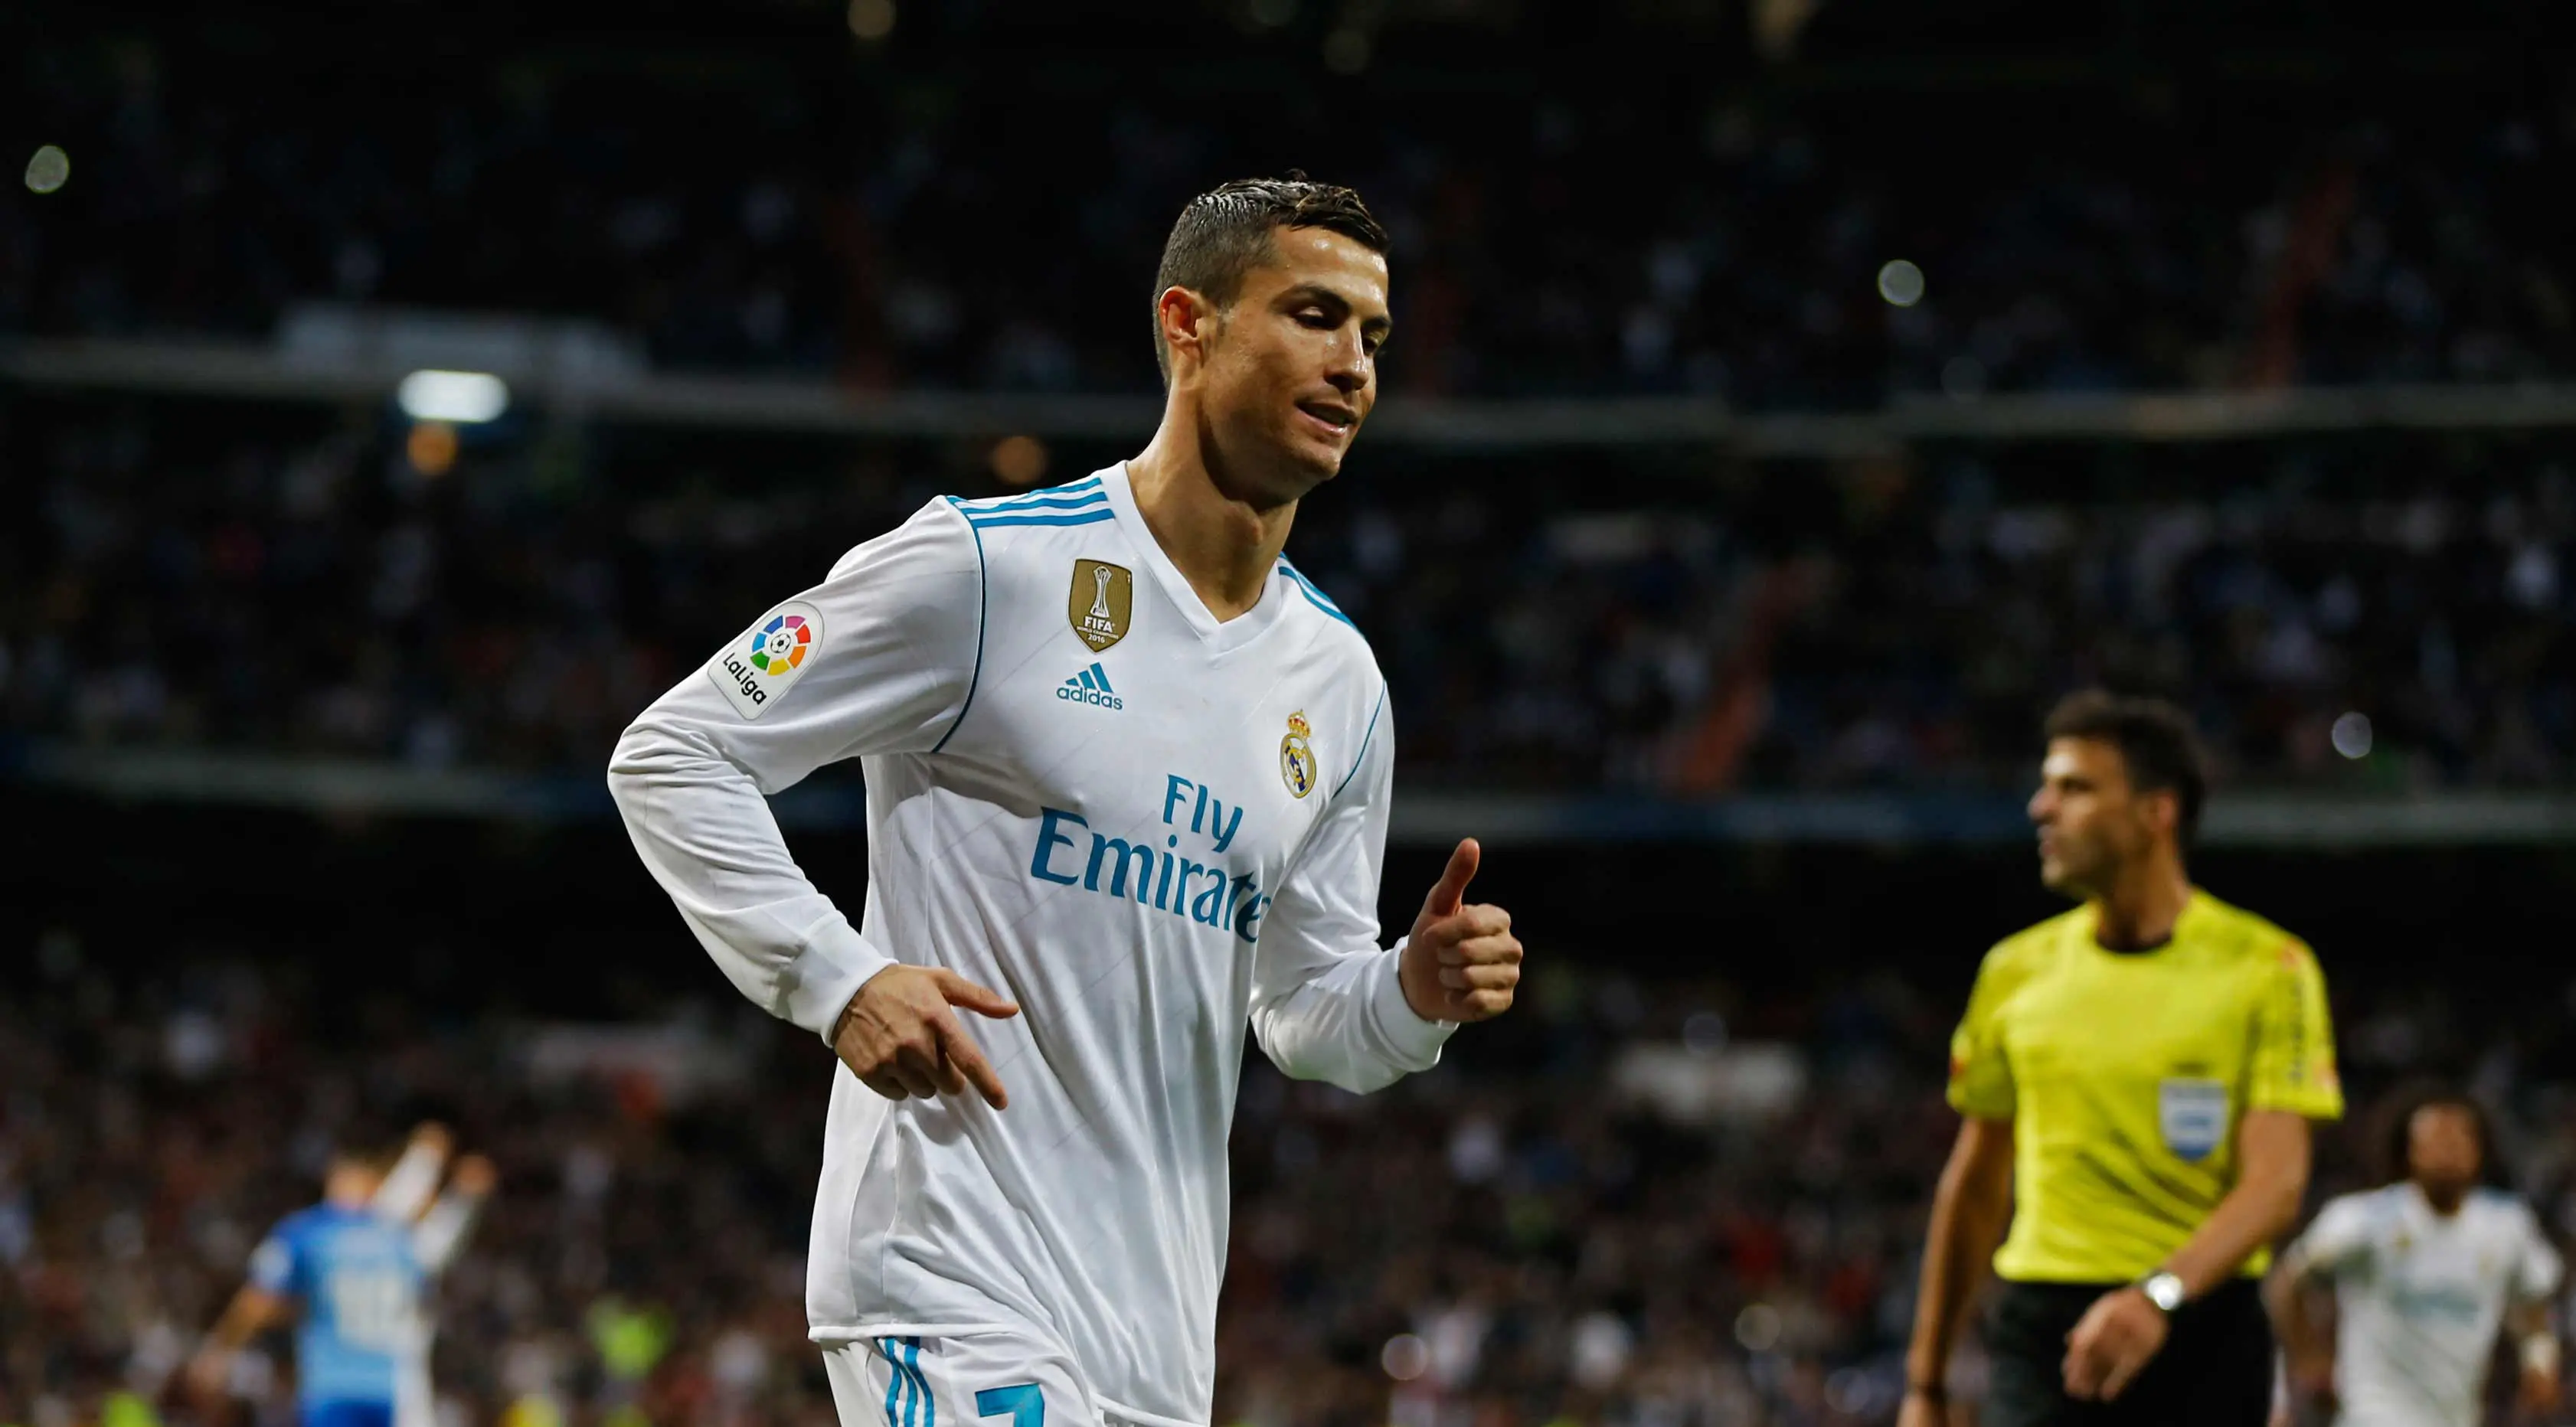 Penyerang Real Madrid, Cristiano Ronaldo melakukan selebrasi usai mencetak gol ke gawang Malaga pada lanjutan La Liga Spanyol di stadion Santiago Bernabeu di Madrid, (25/11). Gol Ronaldo mengantarkan Madrid menang tipis 3-2. (AP Photo / Francisco Seco)